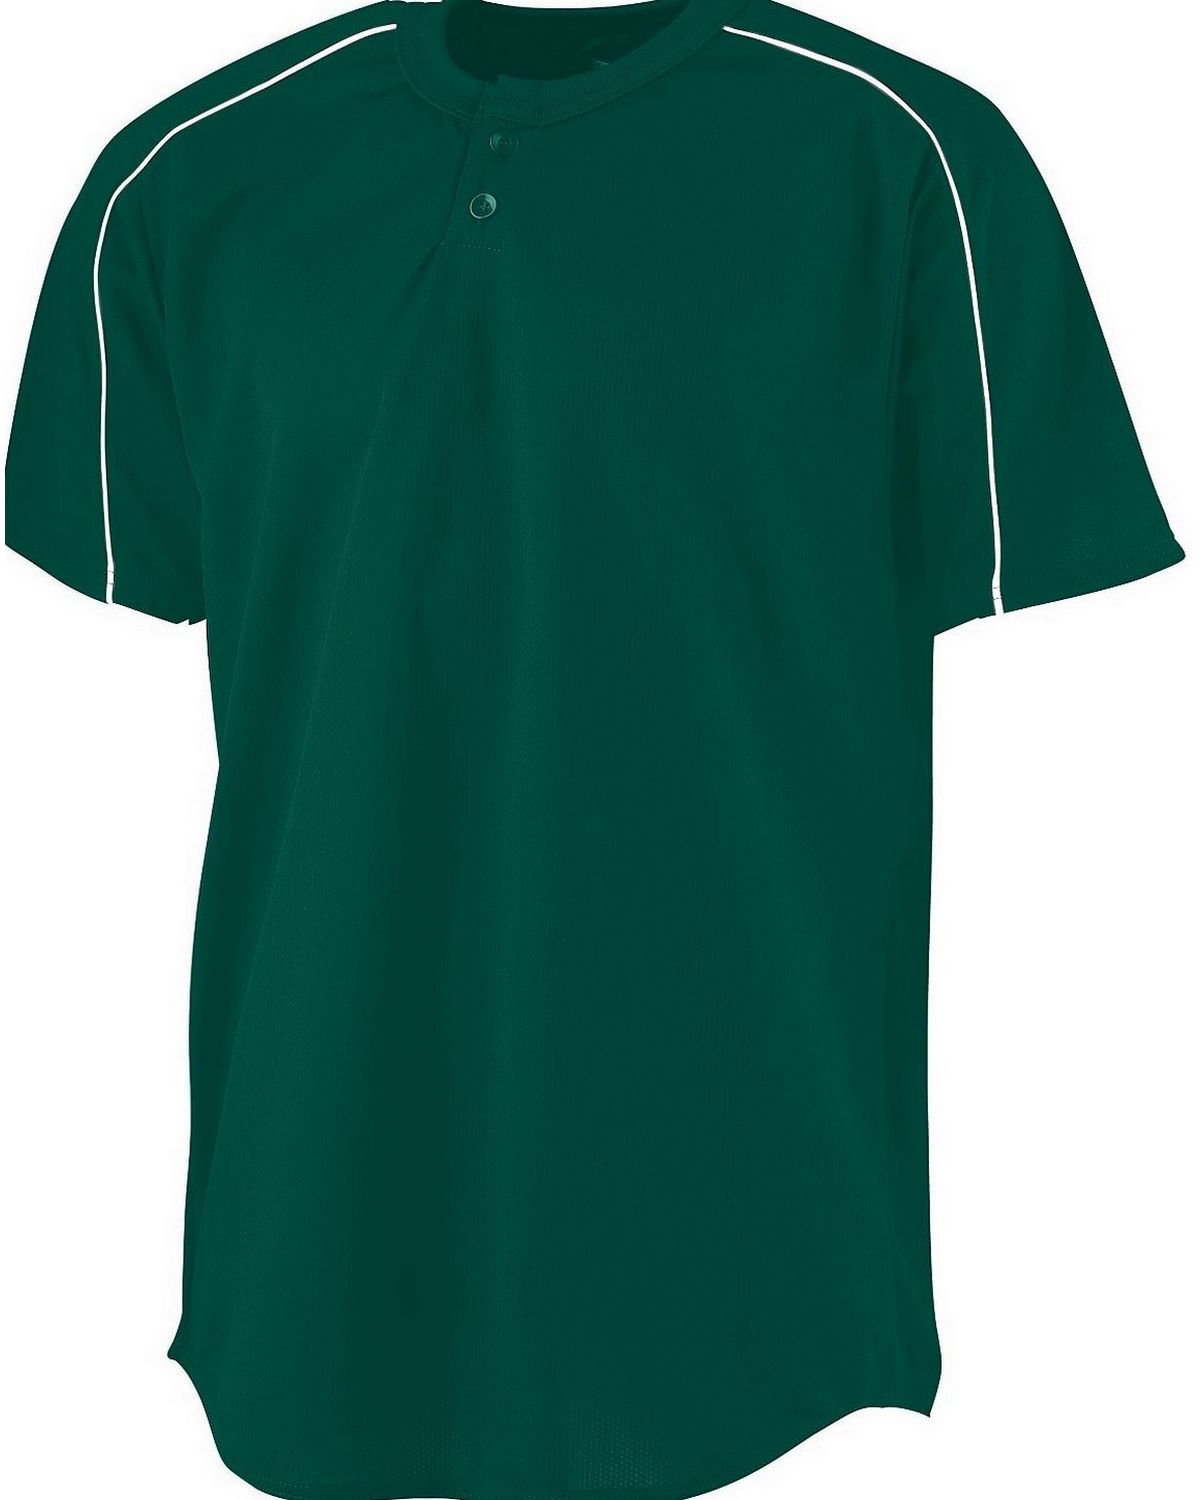 Augusta Sportswear 586 Youth Wicking Two-Button Baseball Jersey